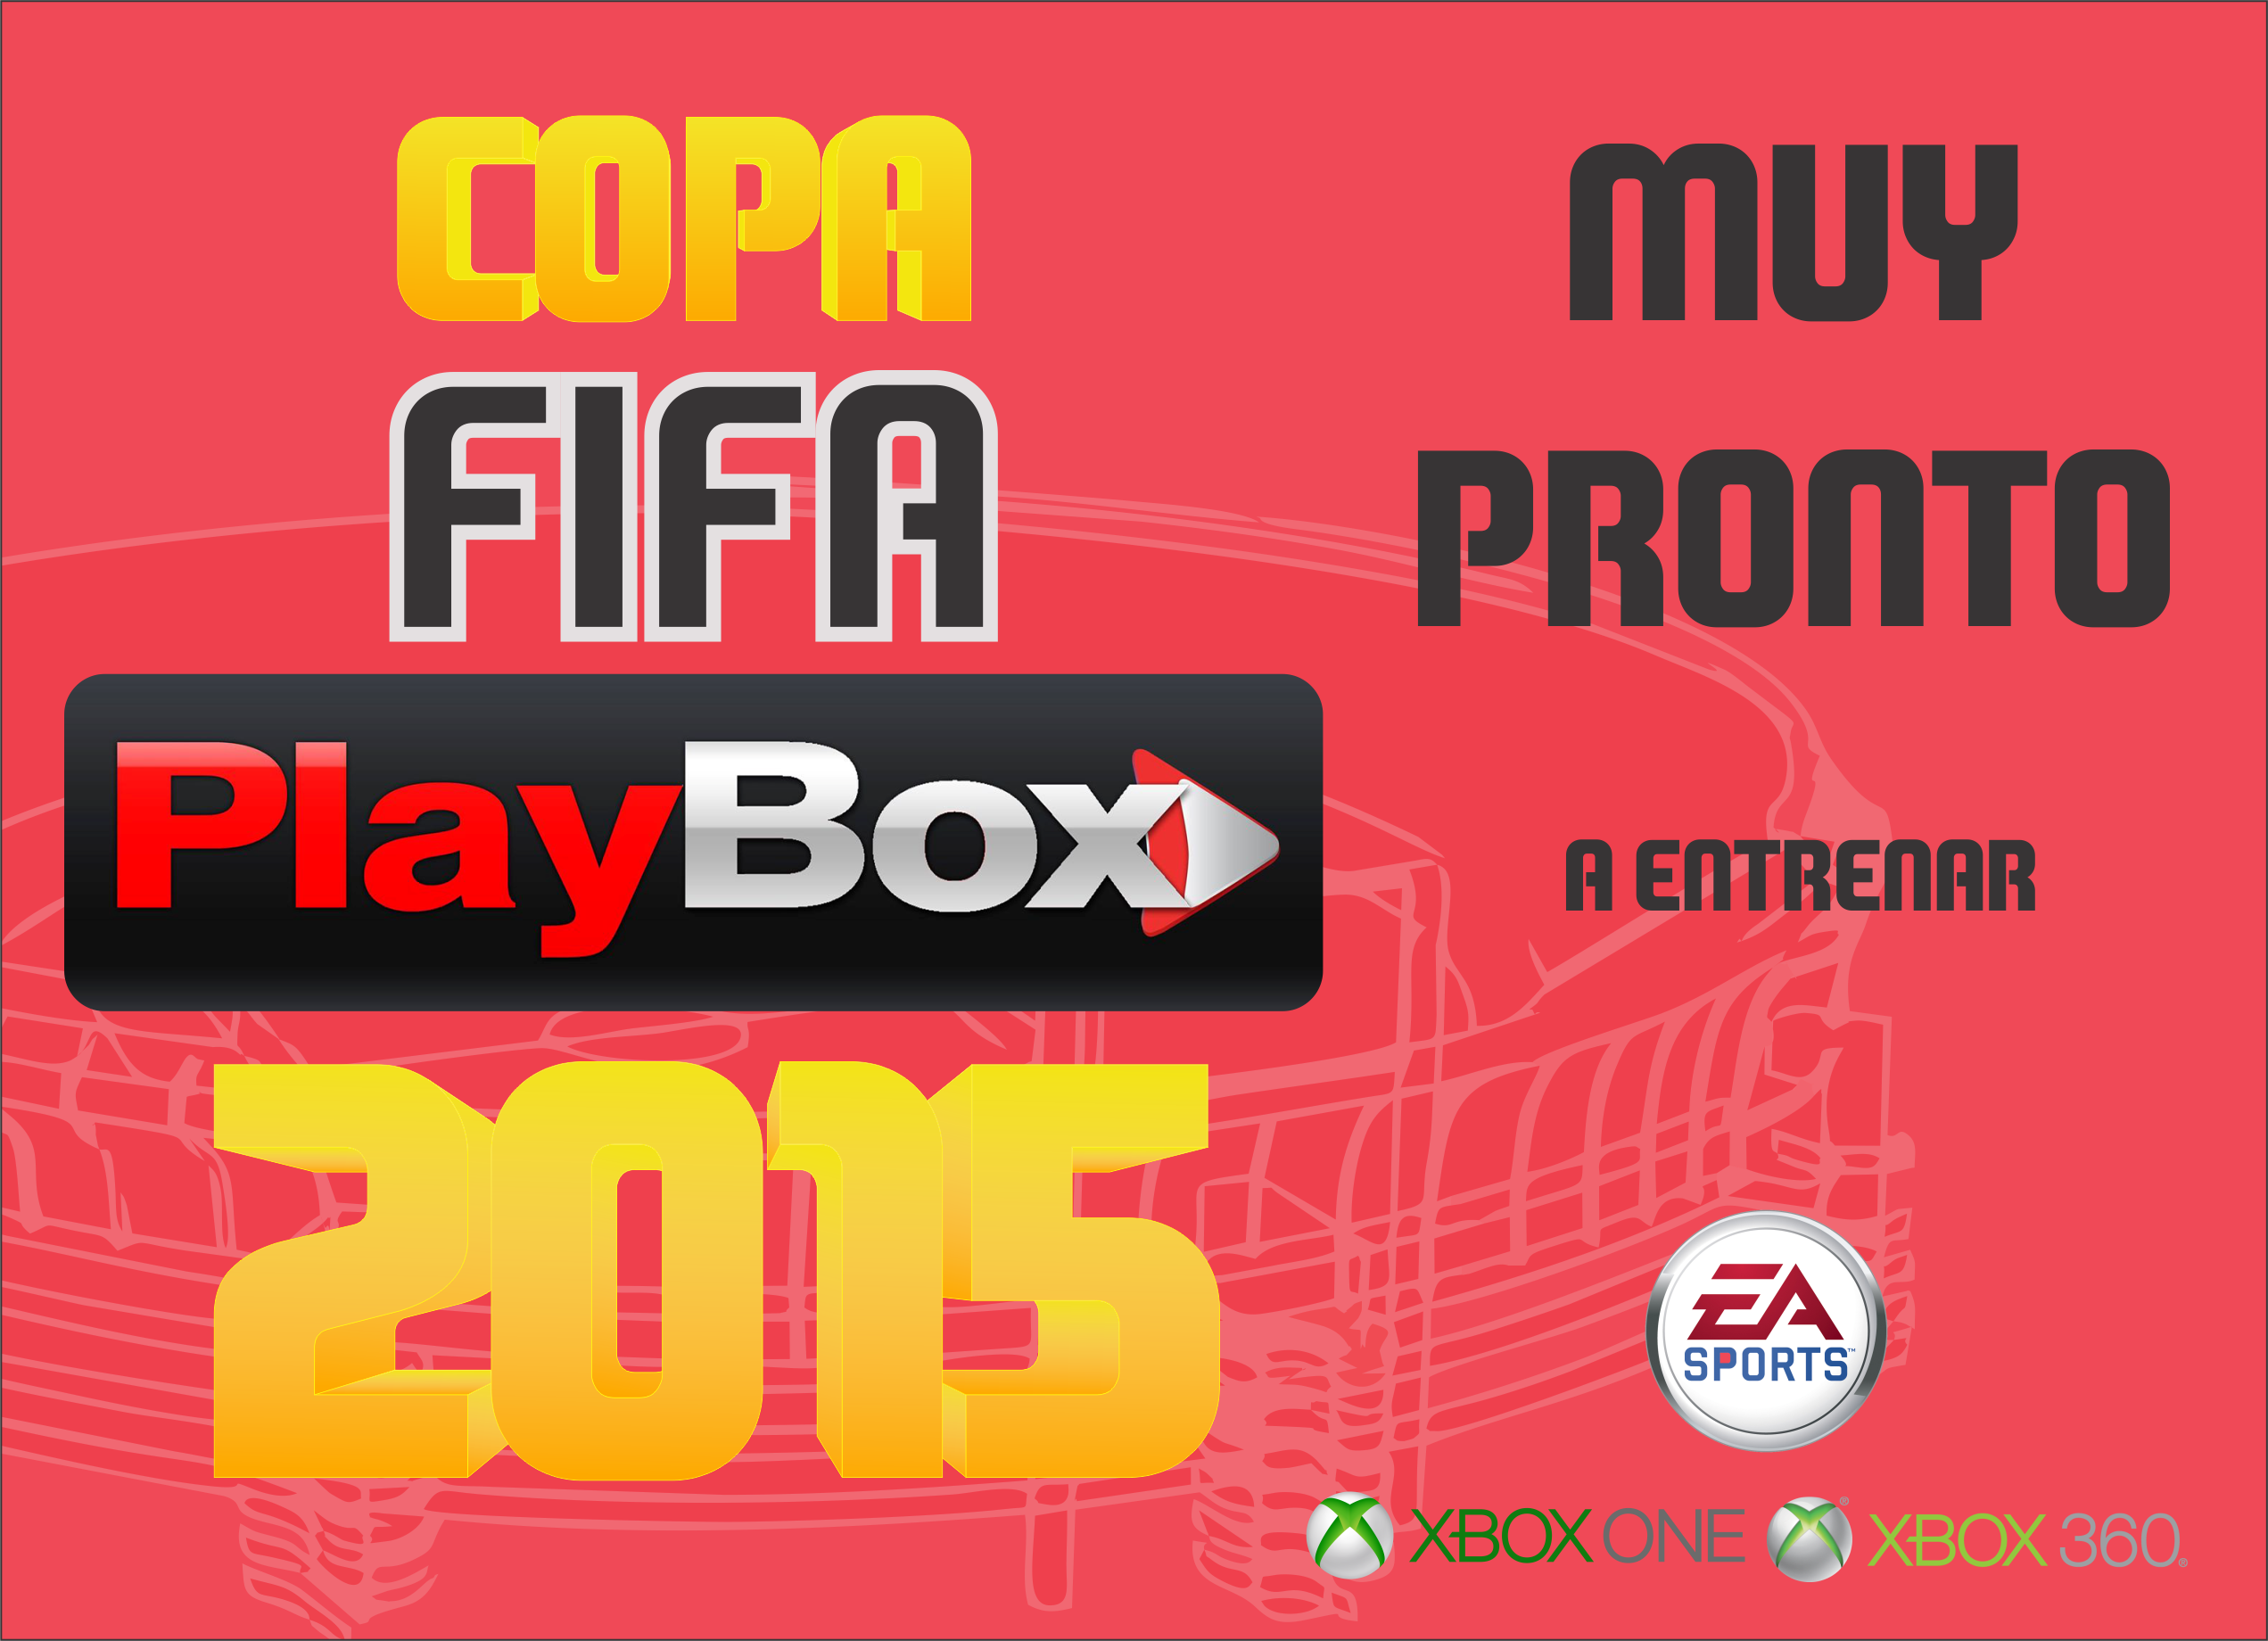 logo de Copa Fifa Playbox 2015